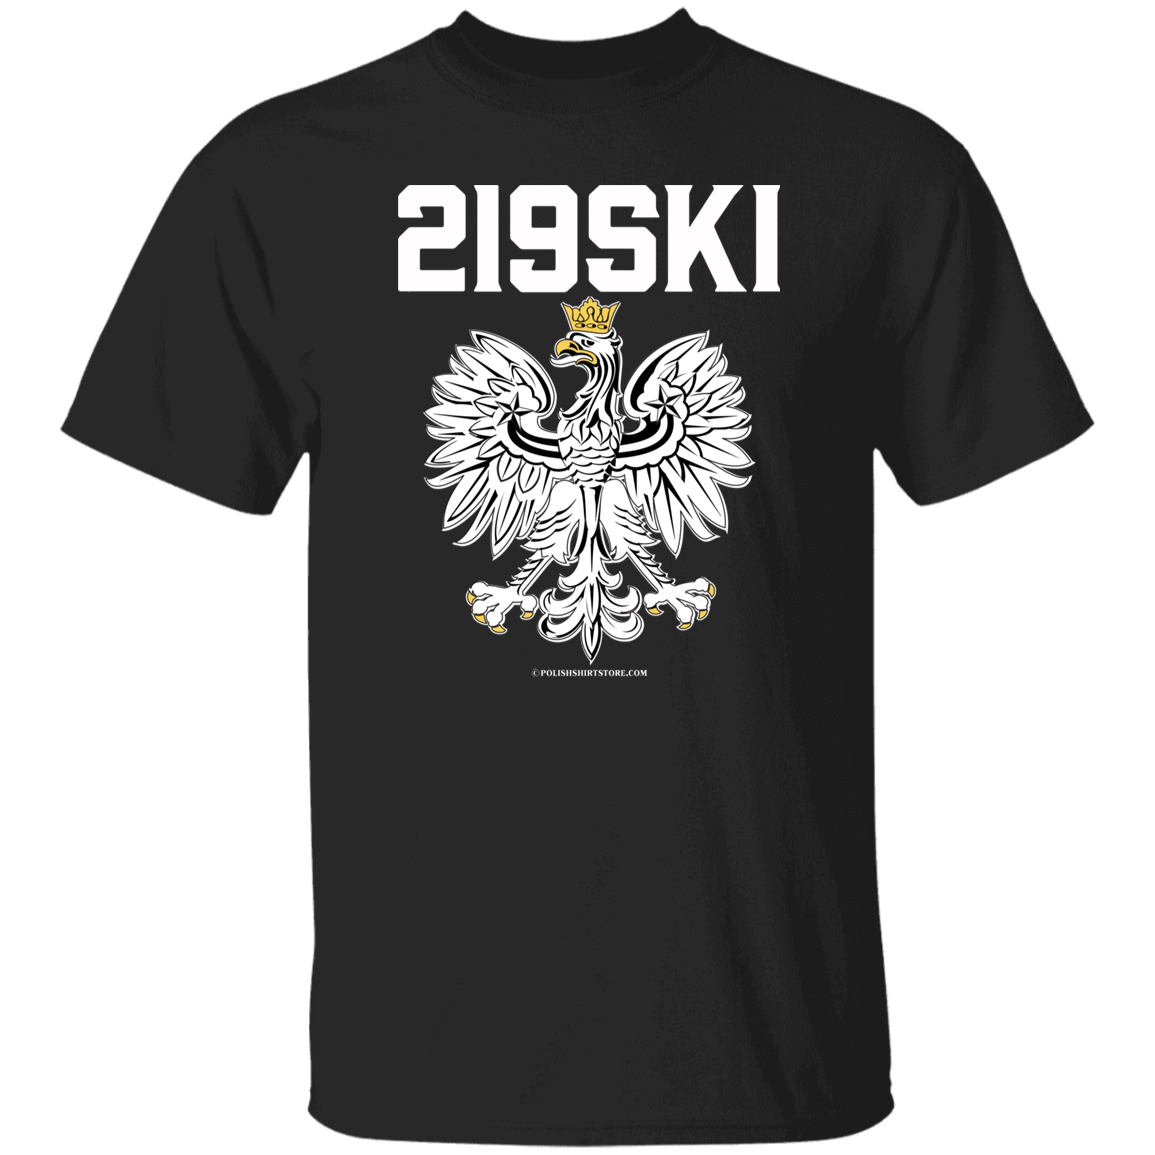 219SKI Apparel CustomCat G500 5.3 oz. T-Shirt Black S